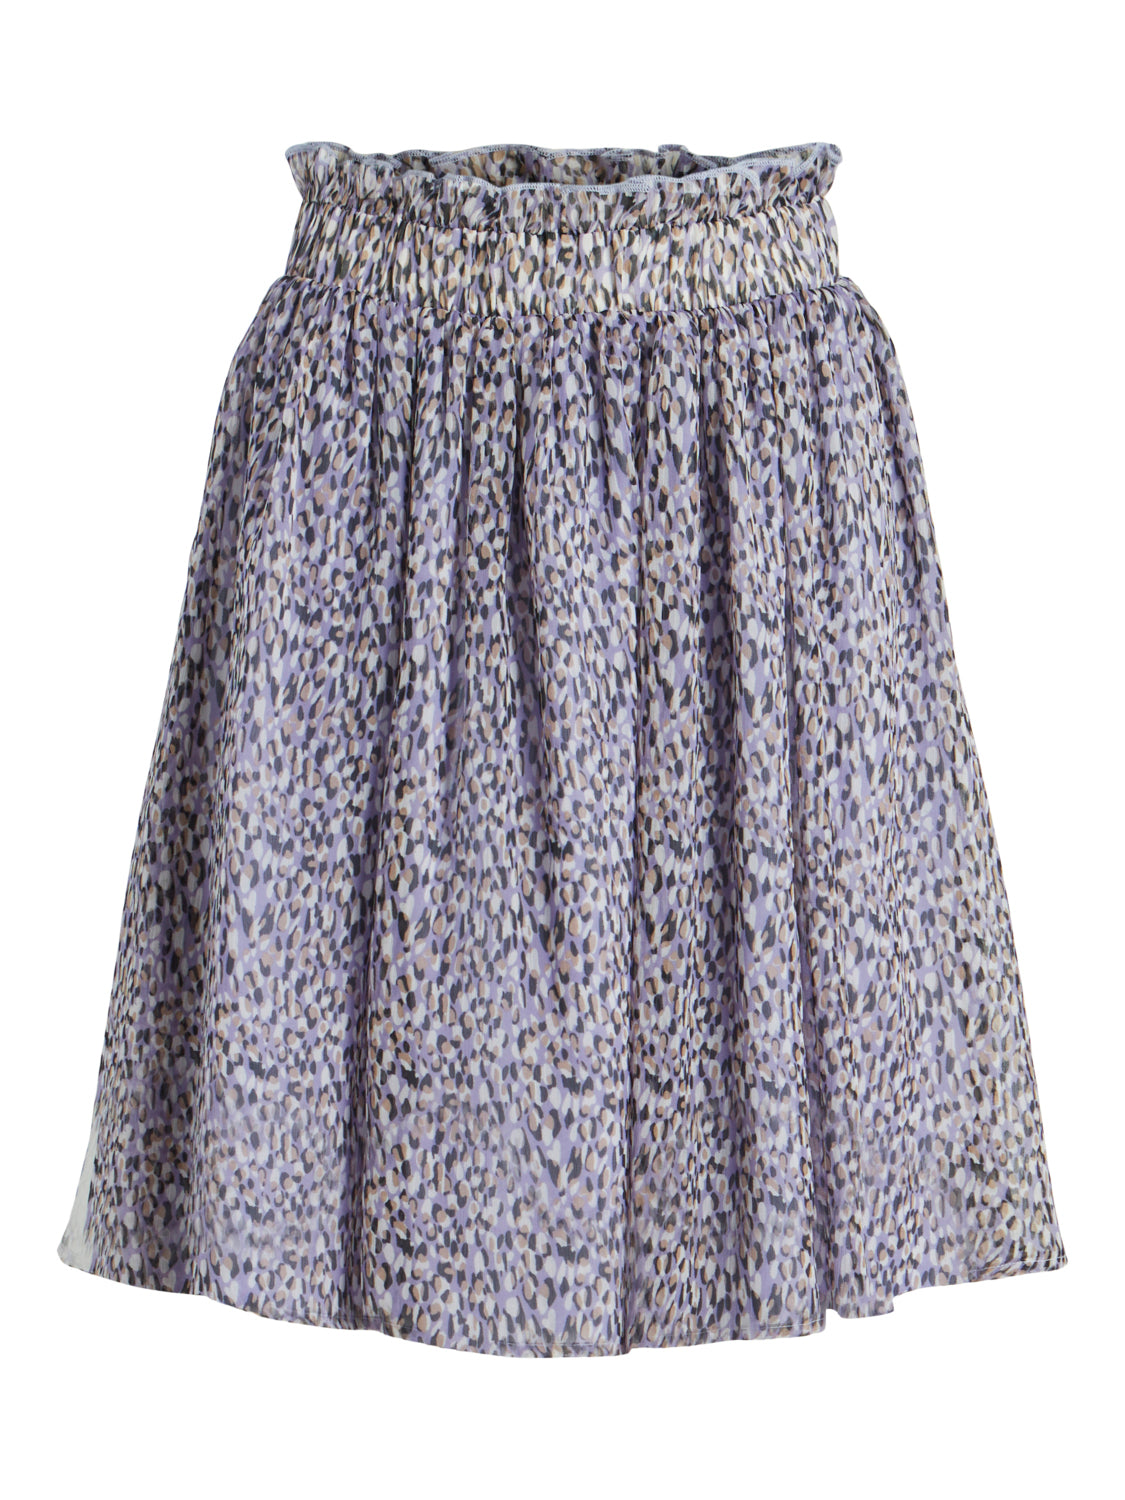 VIFALIA Skirt - Sweet Lavender